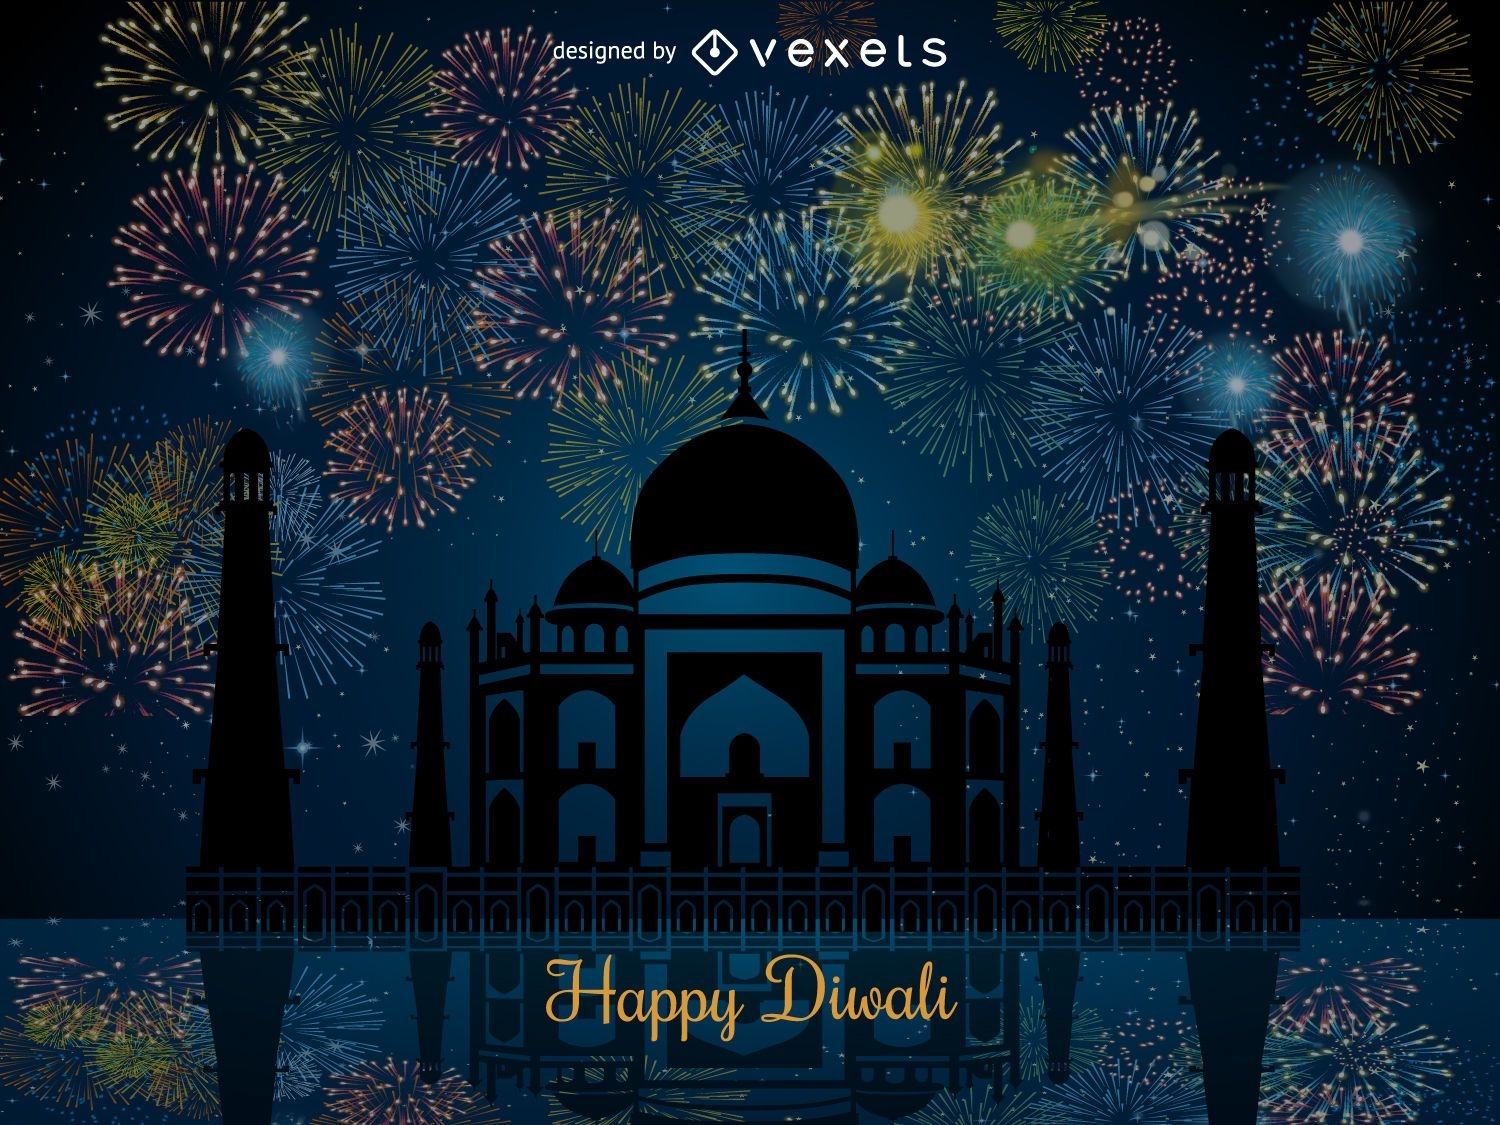 Diwali design with fireworks